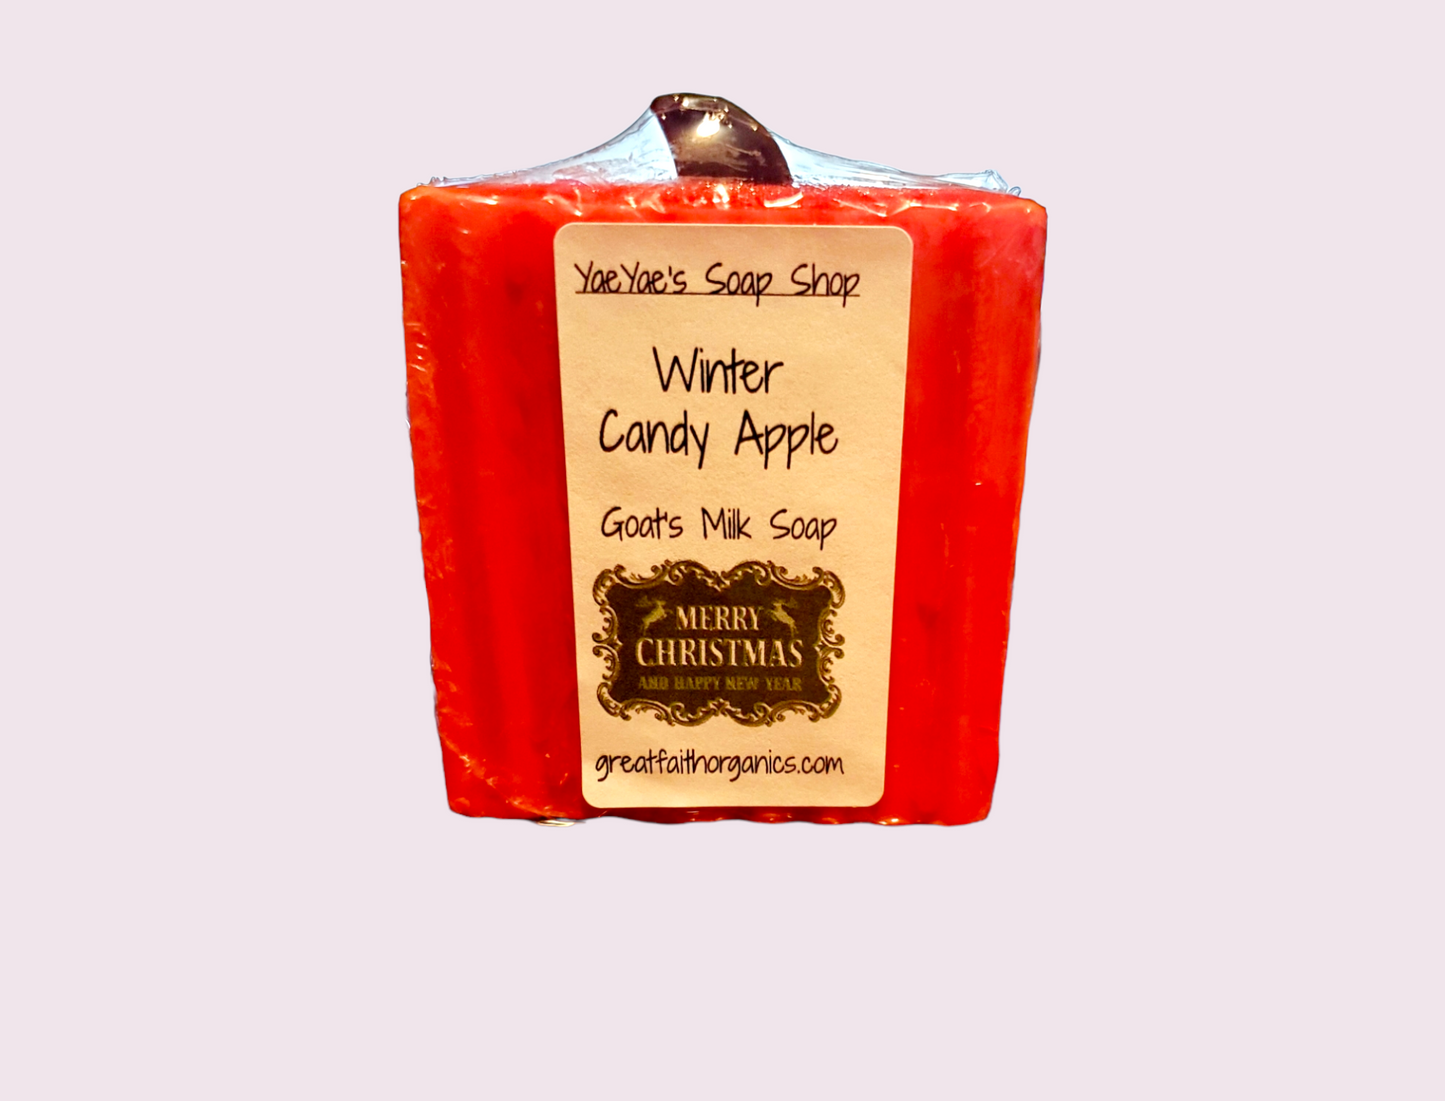 Winter Candy Apple Goat's Milk Soap